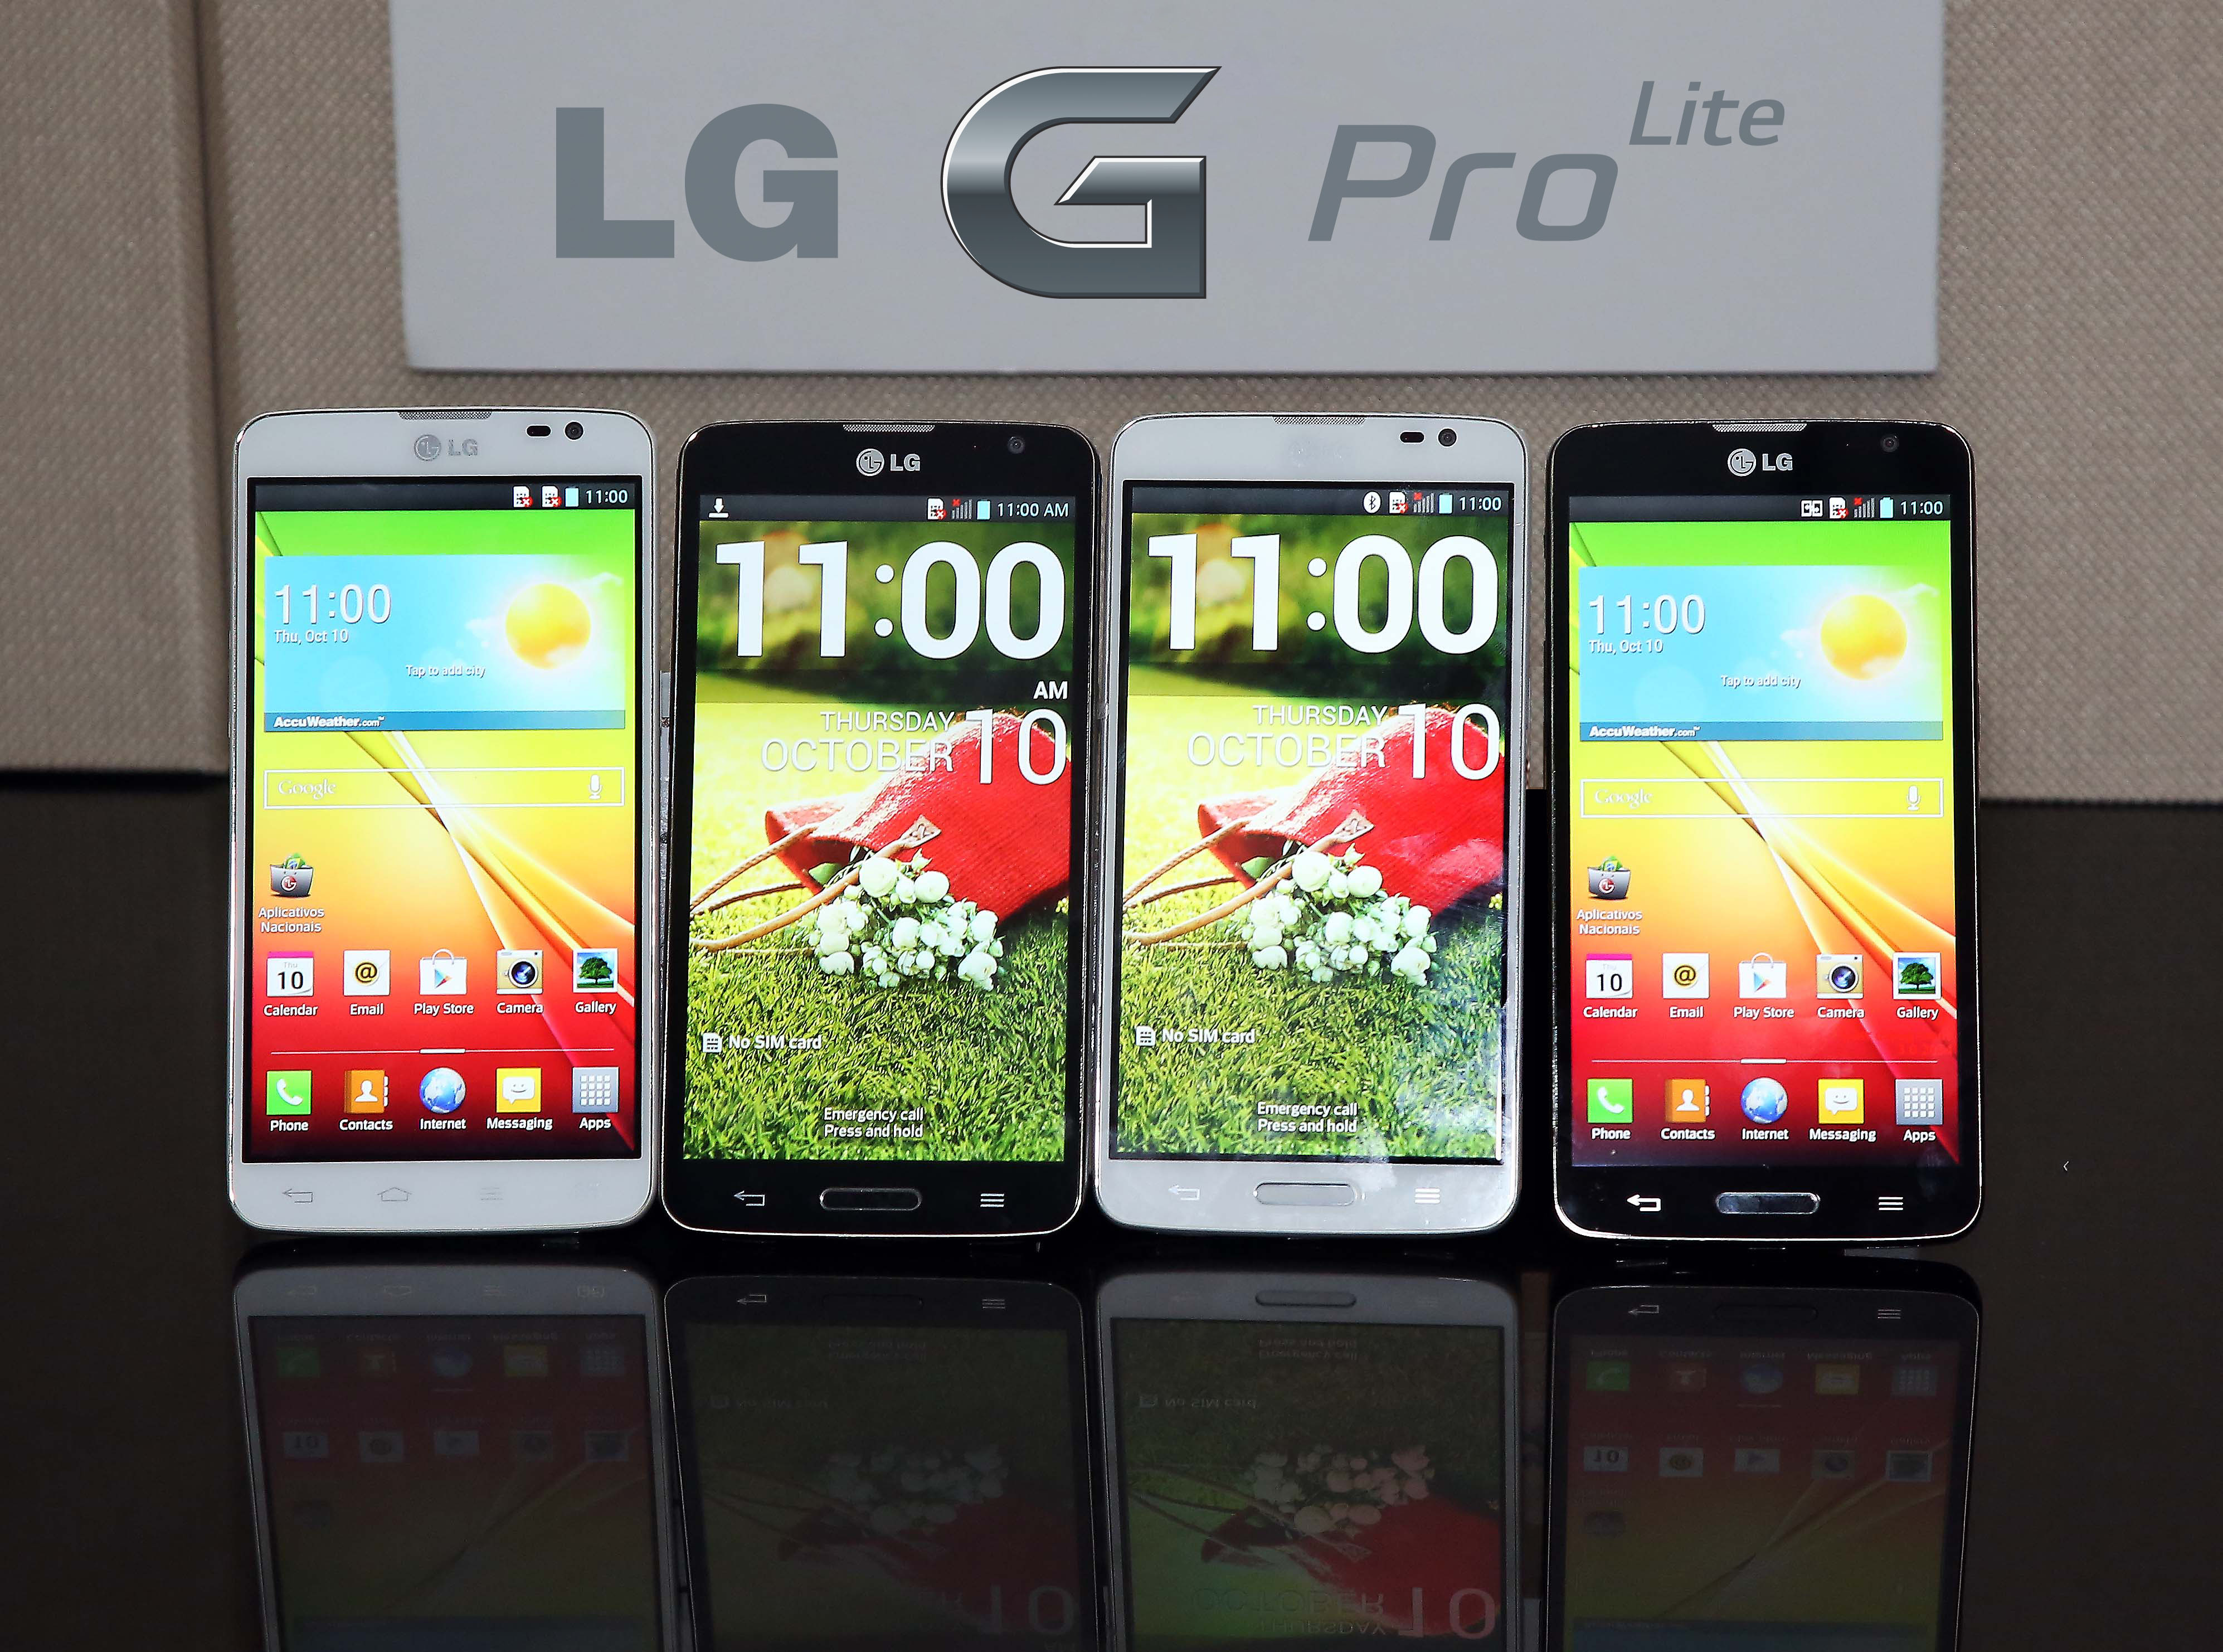 G pro lite. LG G Pro Lite. Смартфон LG Optimus Pro c660. LG Pro x. Первые смартфоны LG на андроиде.